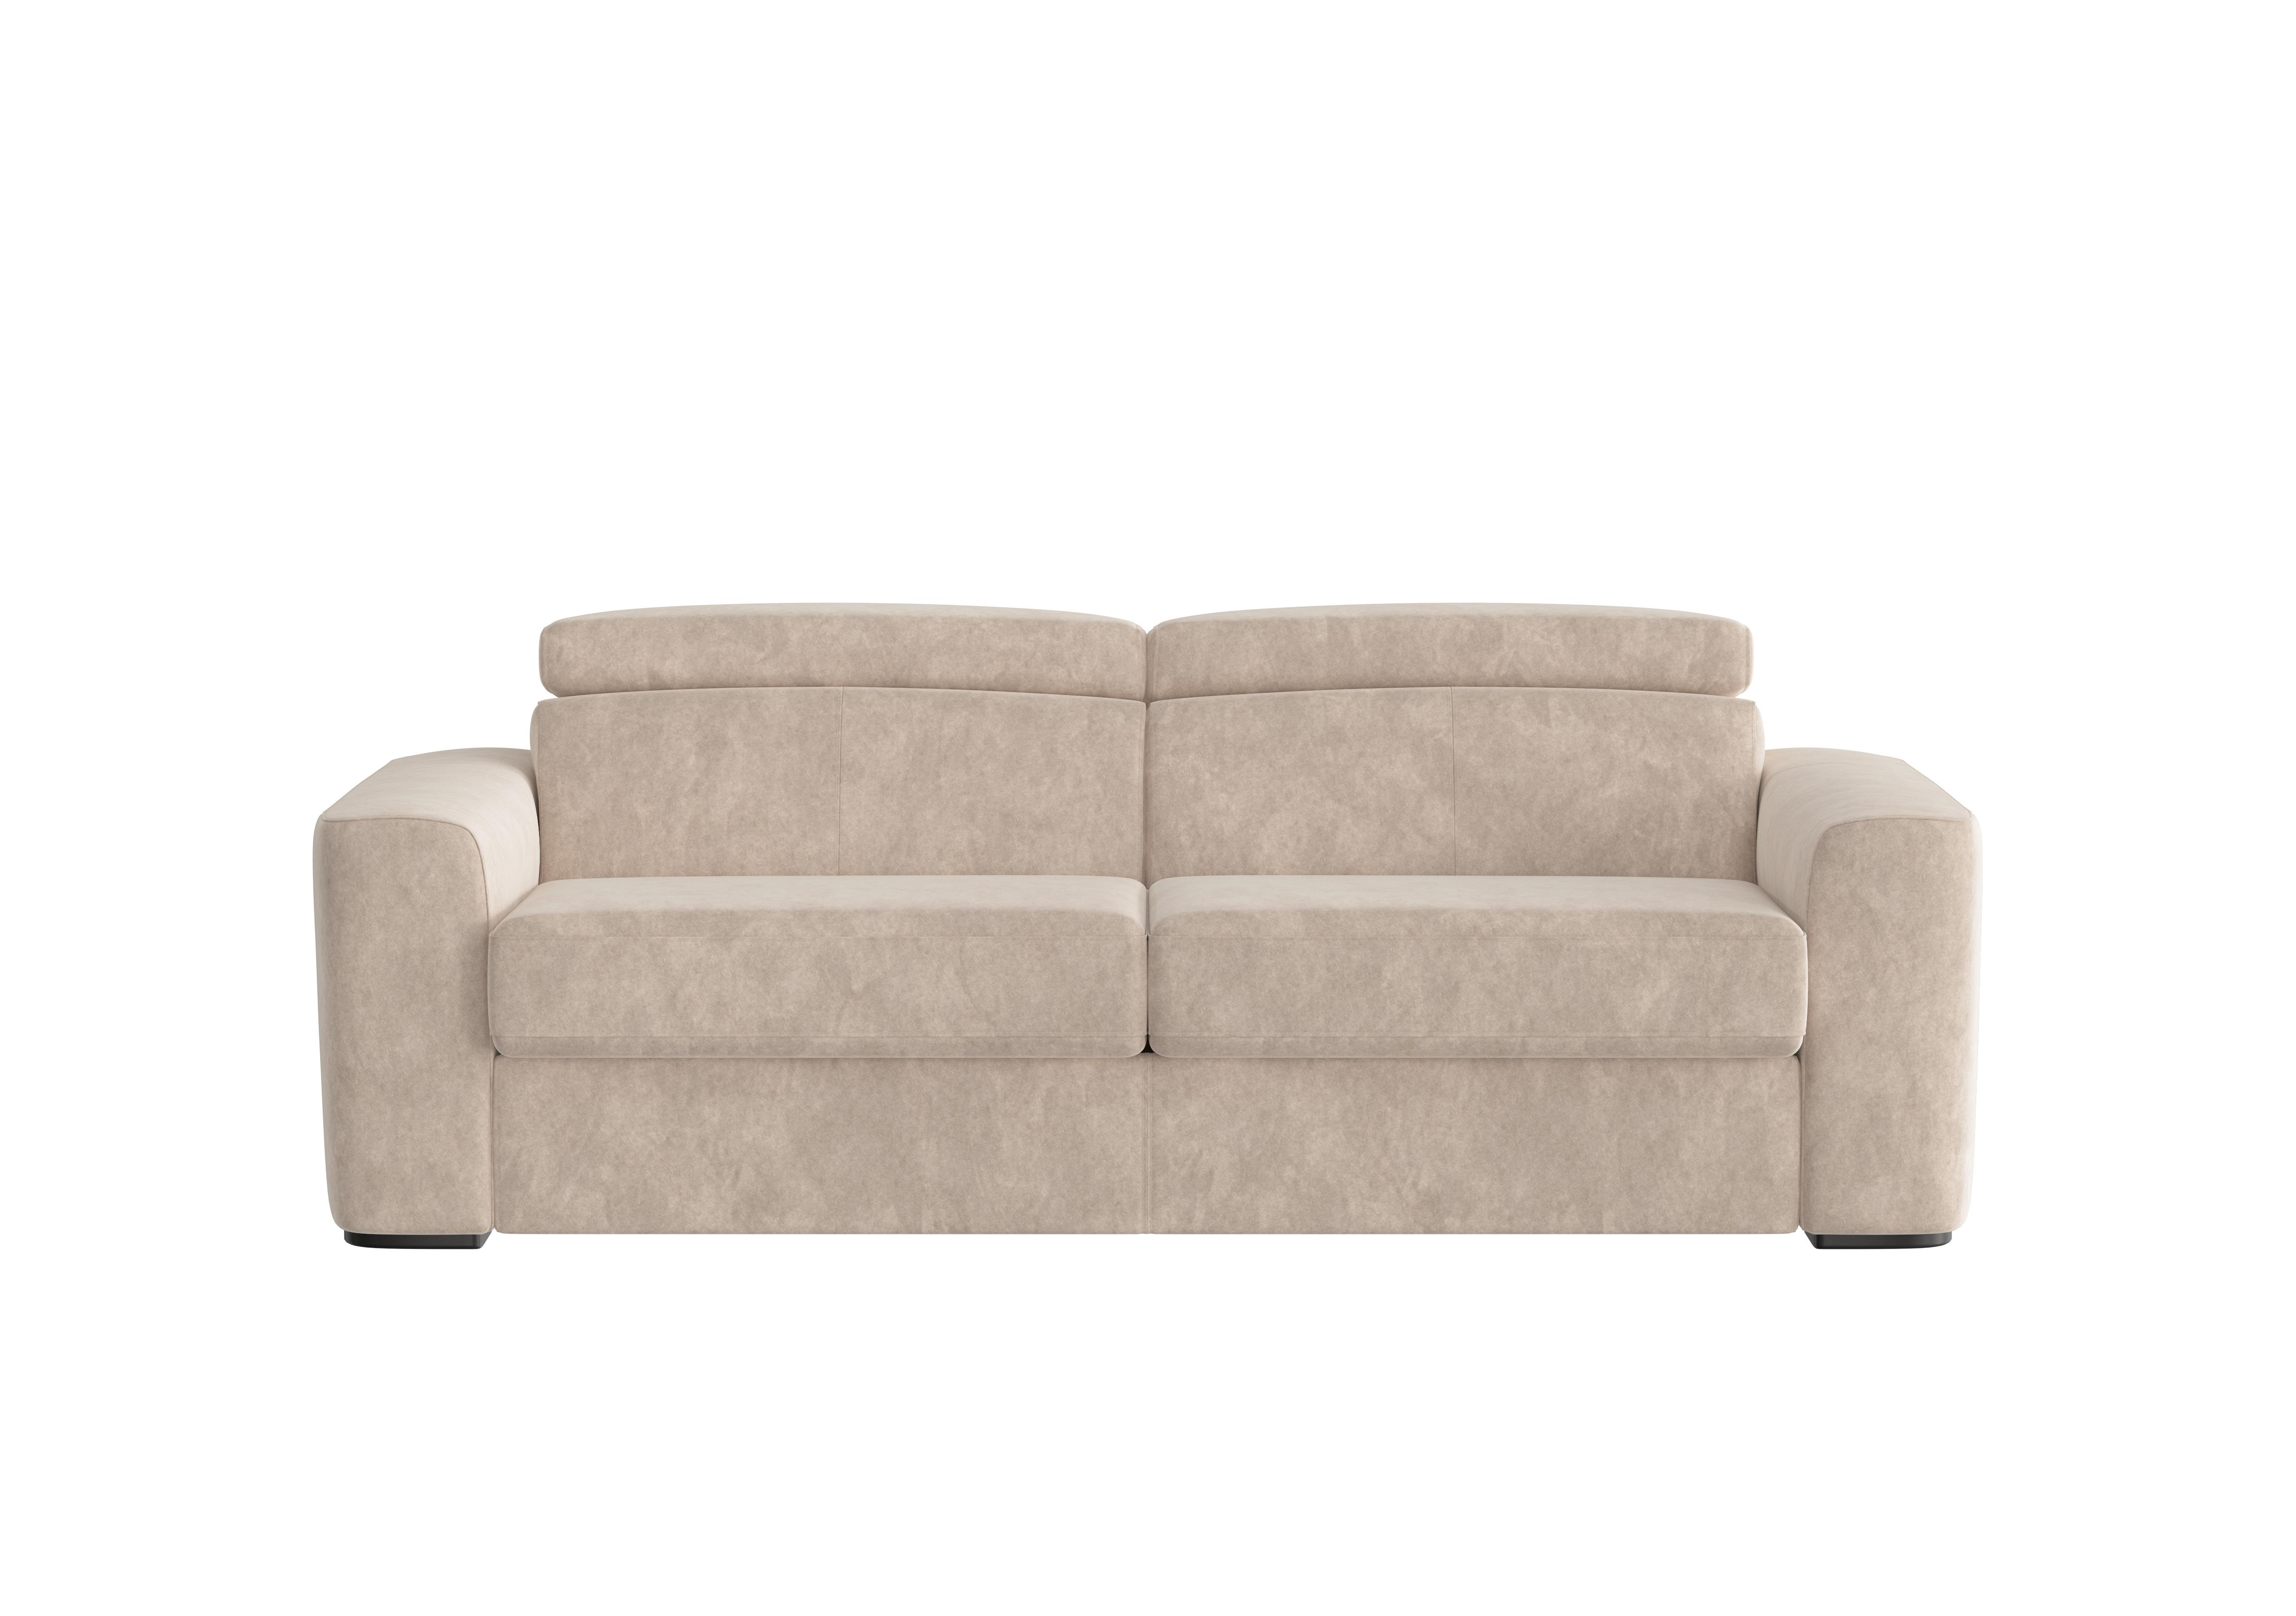 Infinity 3 Seater Fabric Sofa Bed in Bfa-Bnn-R26 Fv2 Cream on Furniture Village